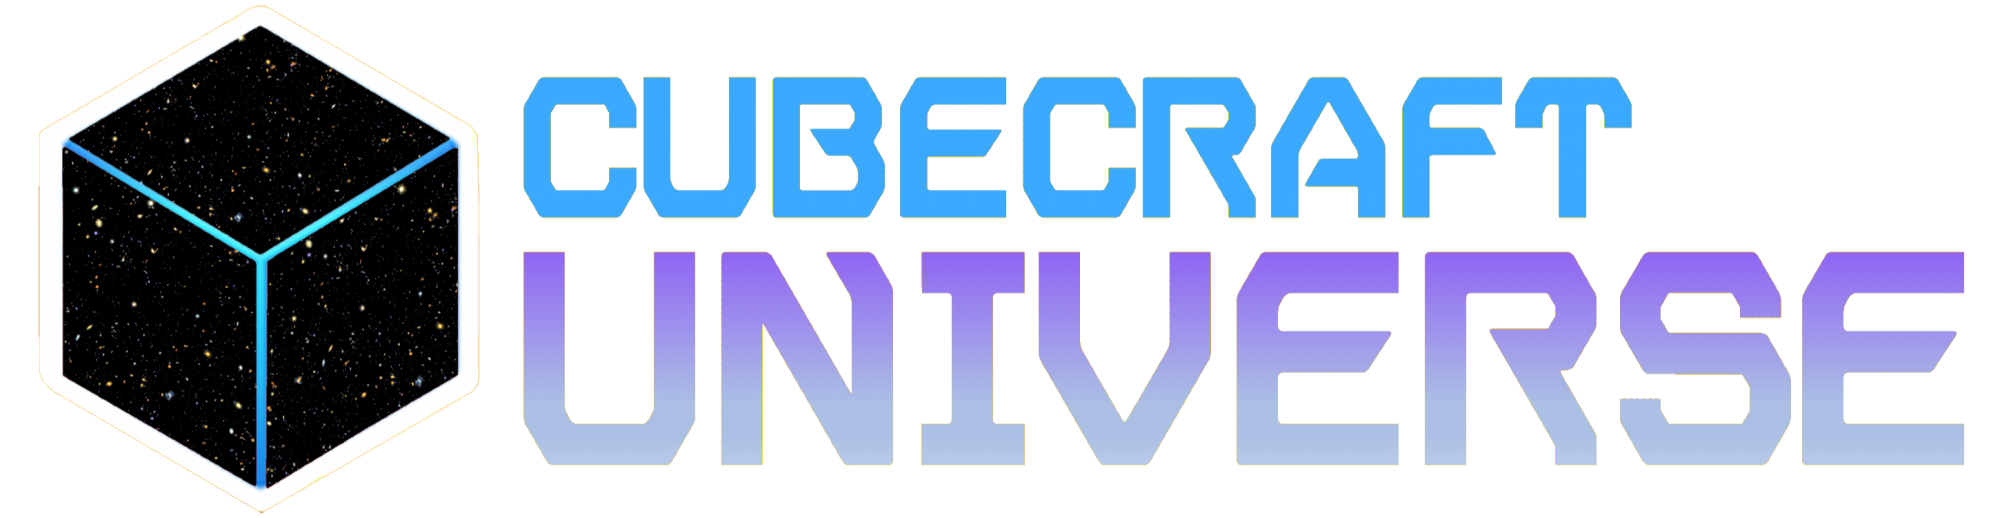 CubeCraft Universe.png